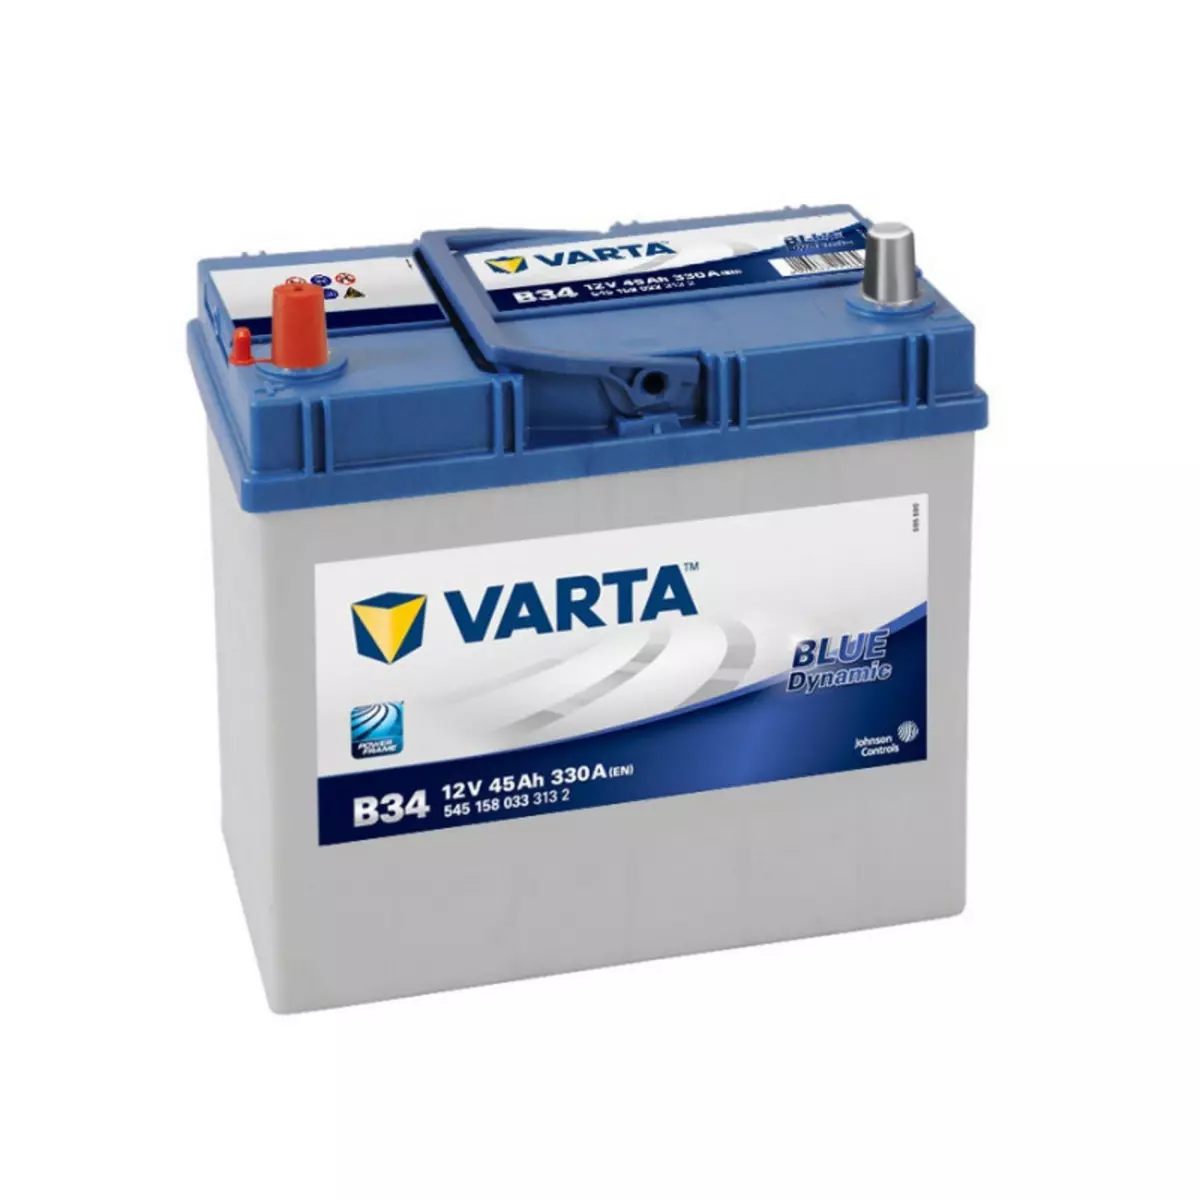 Varta Batterie Varta Blue Dynamic B34 12v 45ah 330A 545 158 033